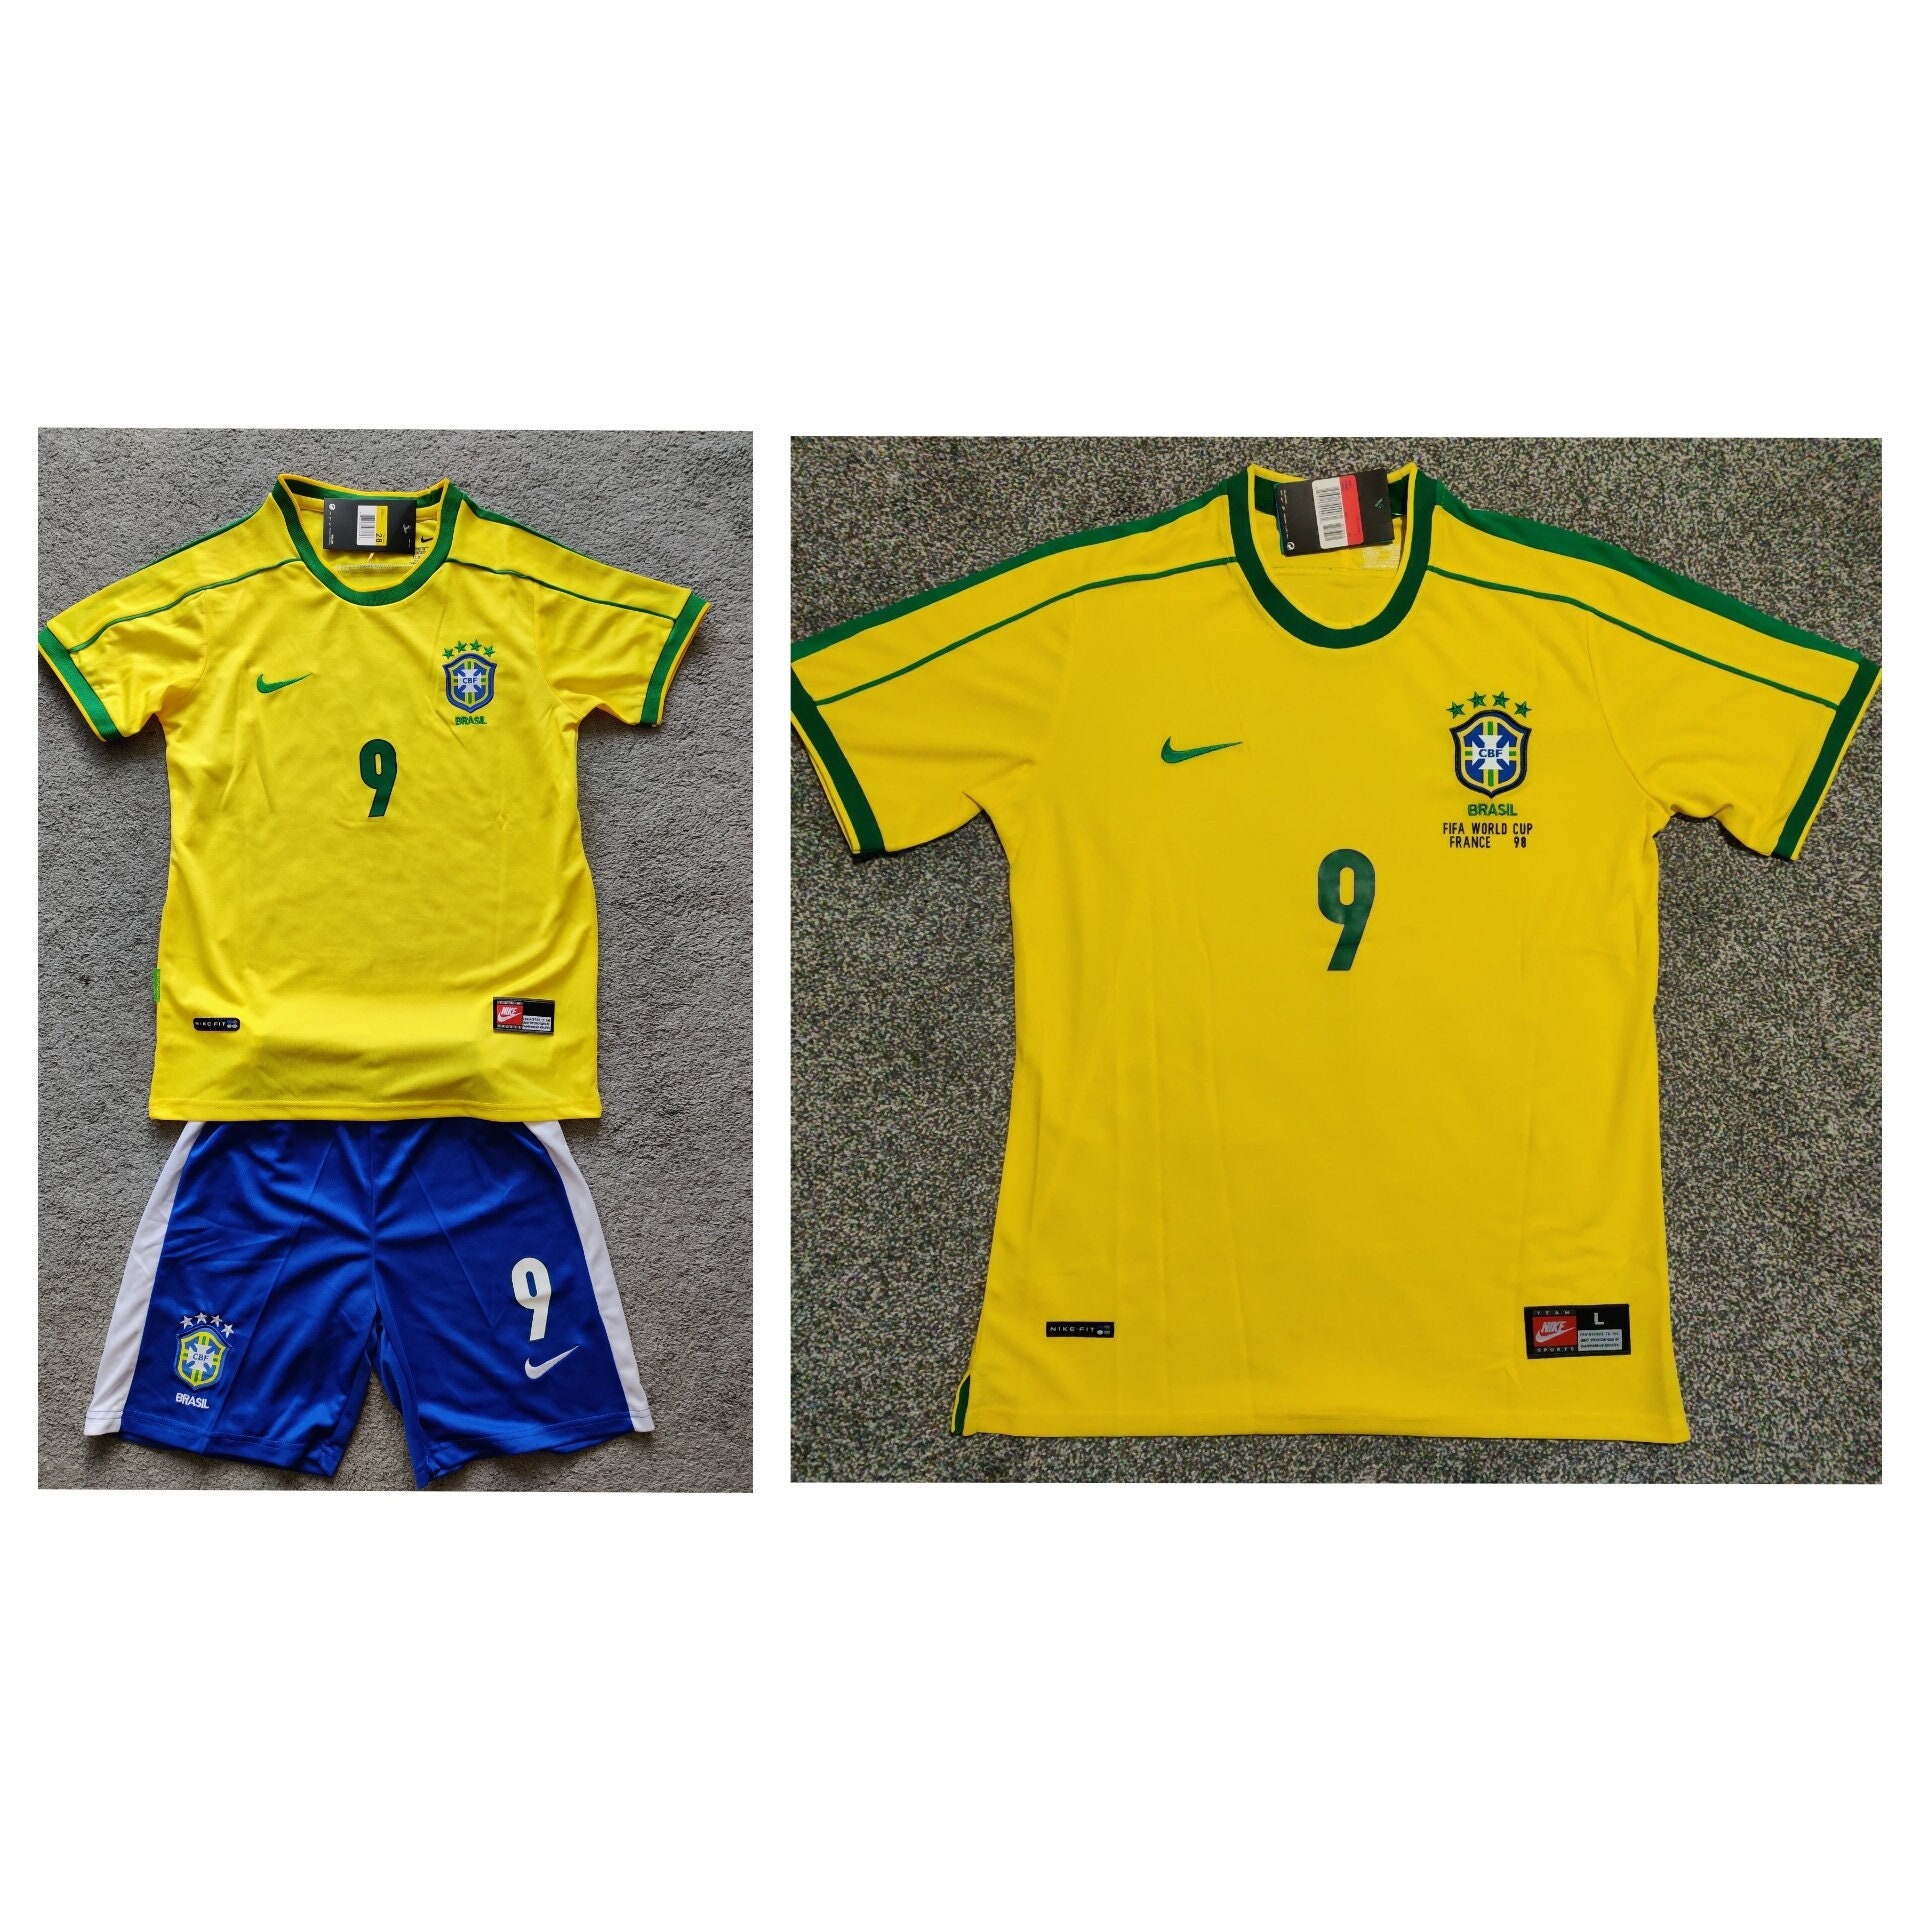 Nike Brazil Very Rare Football Shirt World Champions Soccer Jersey